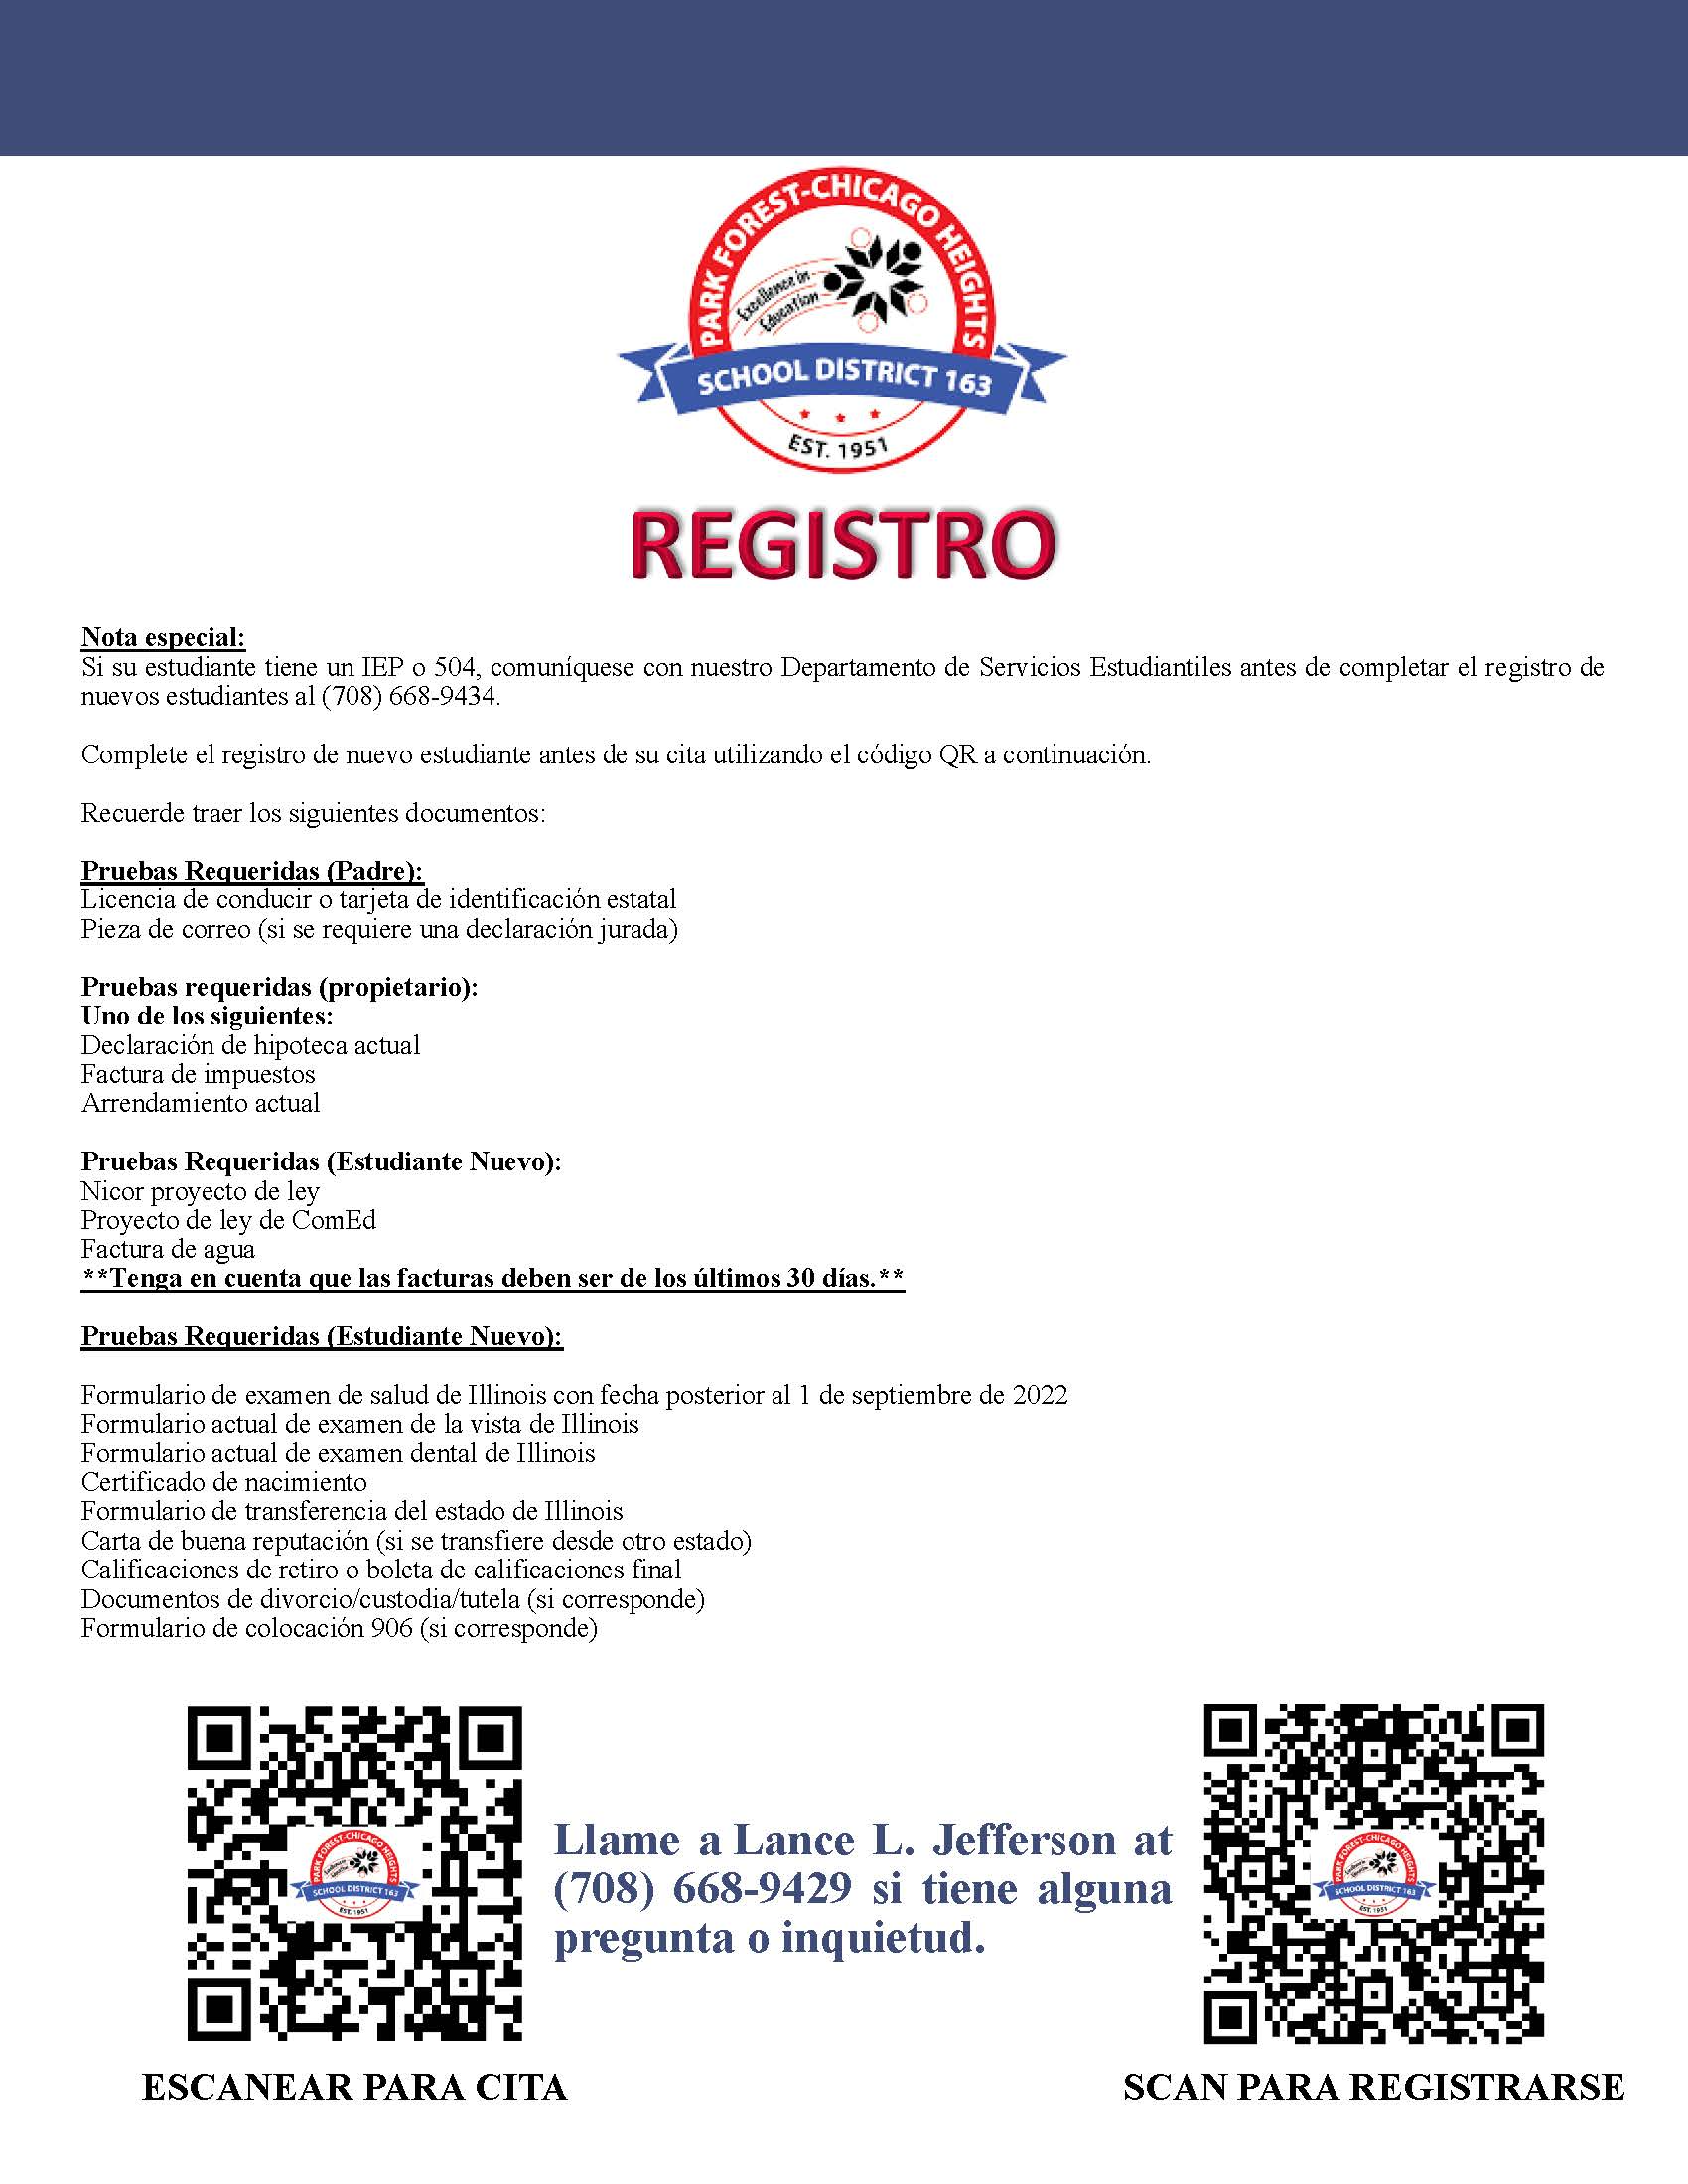 new registration in Spanish